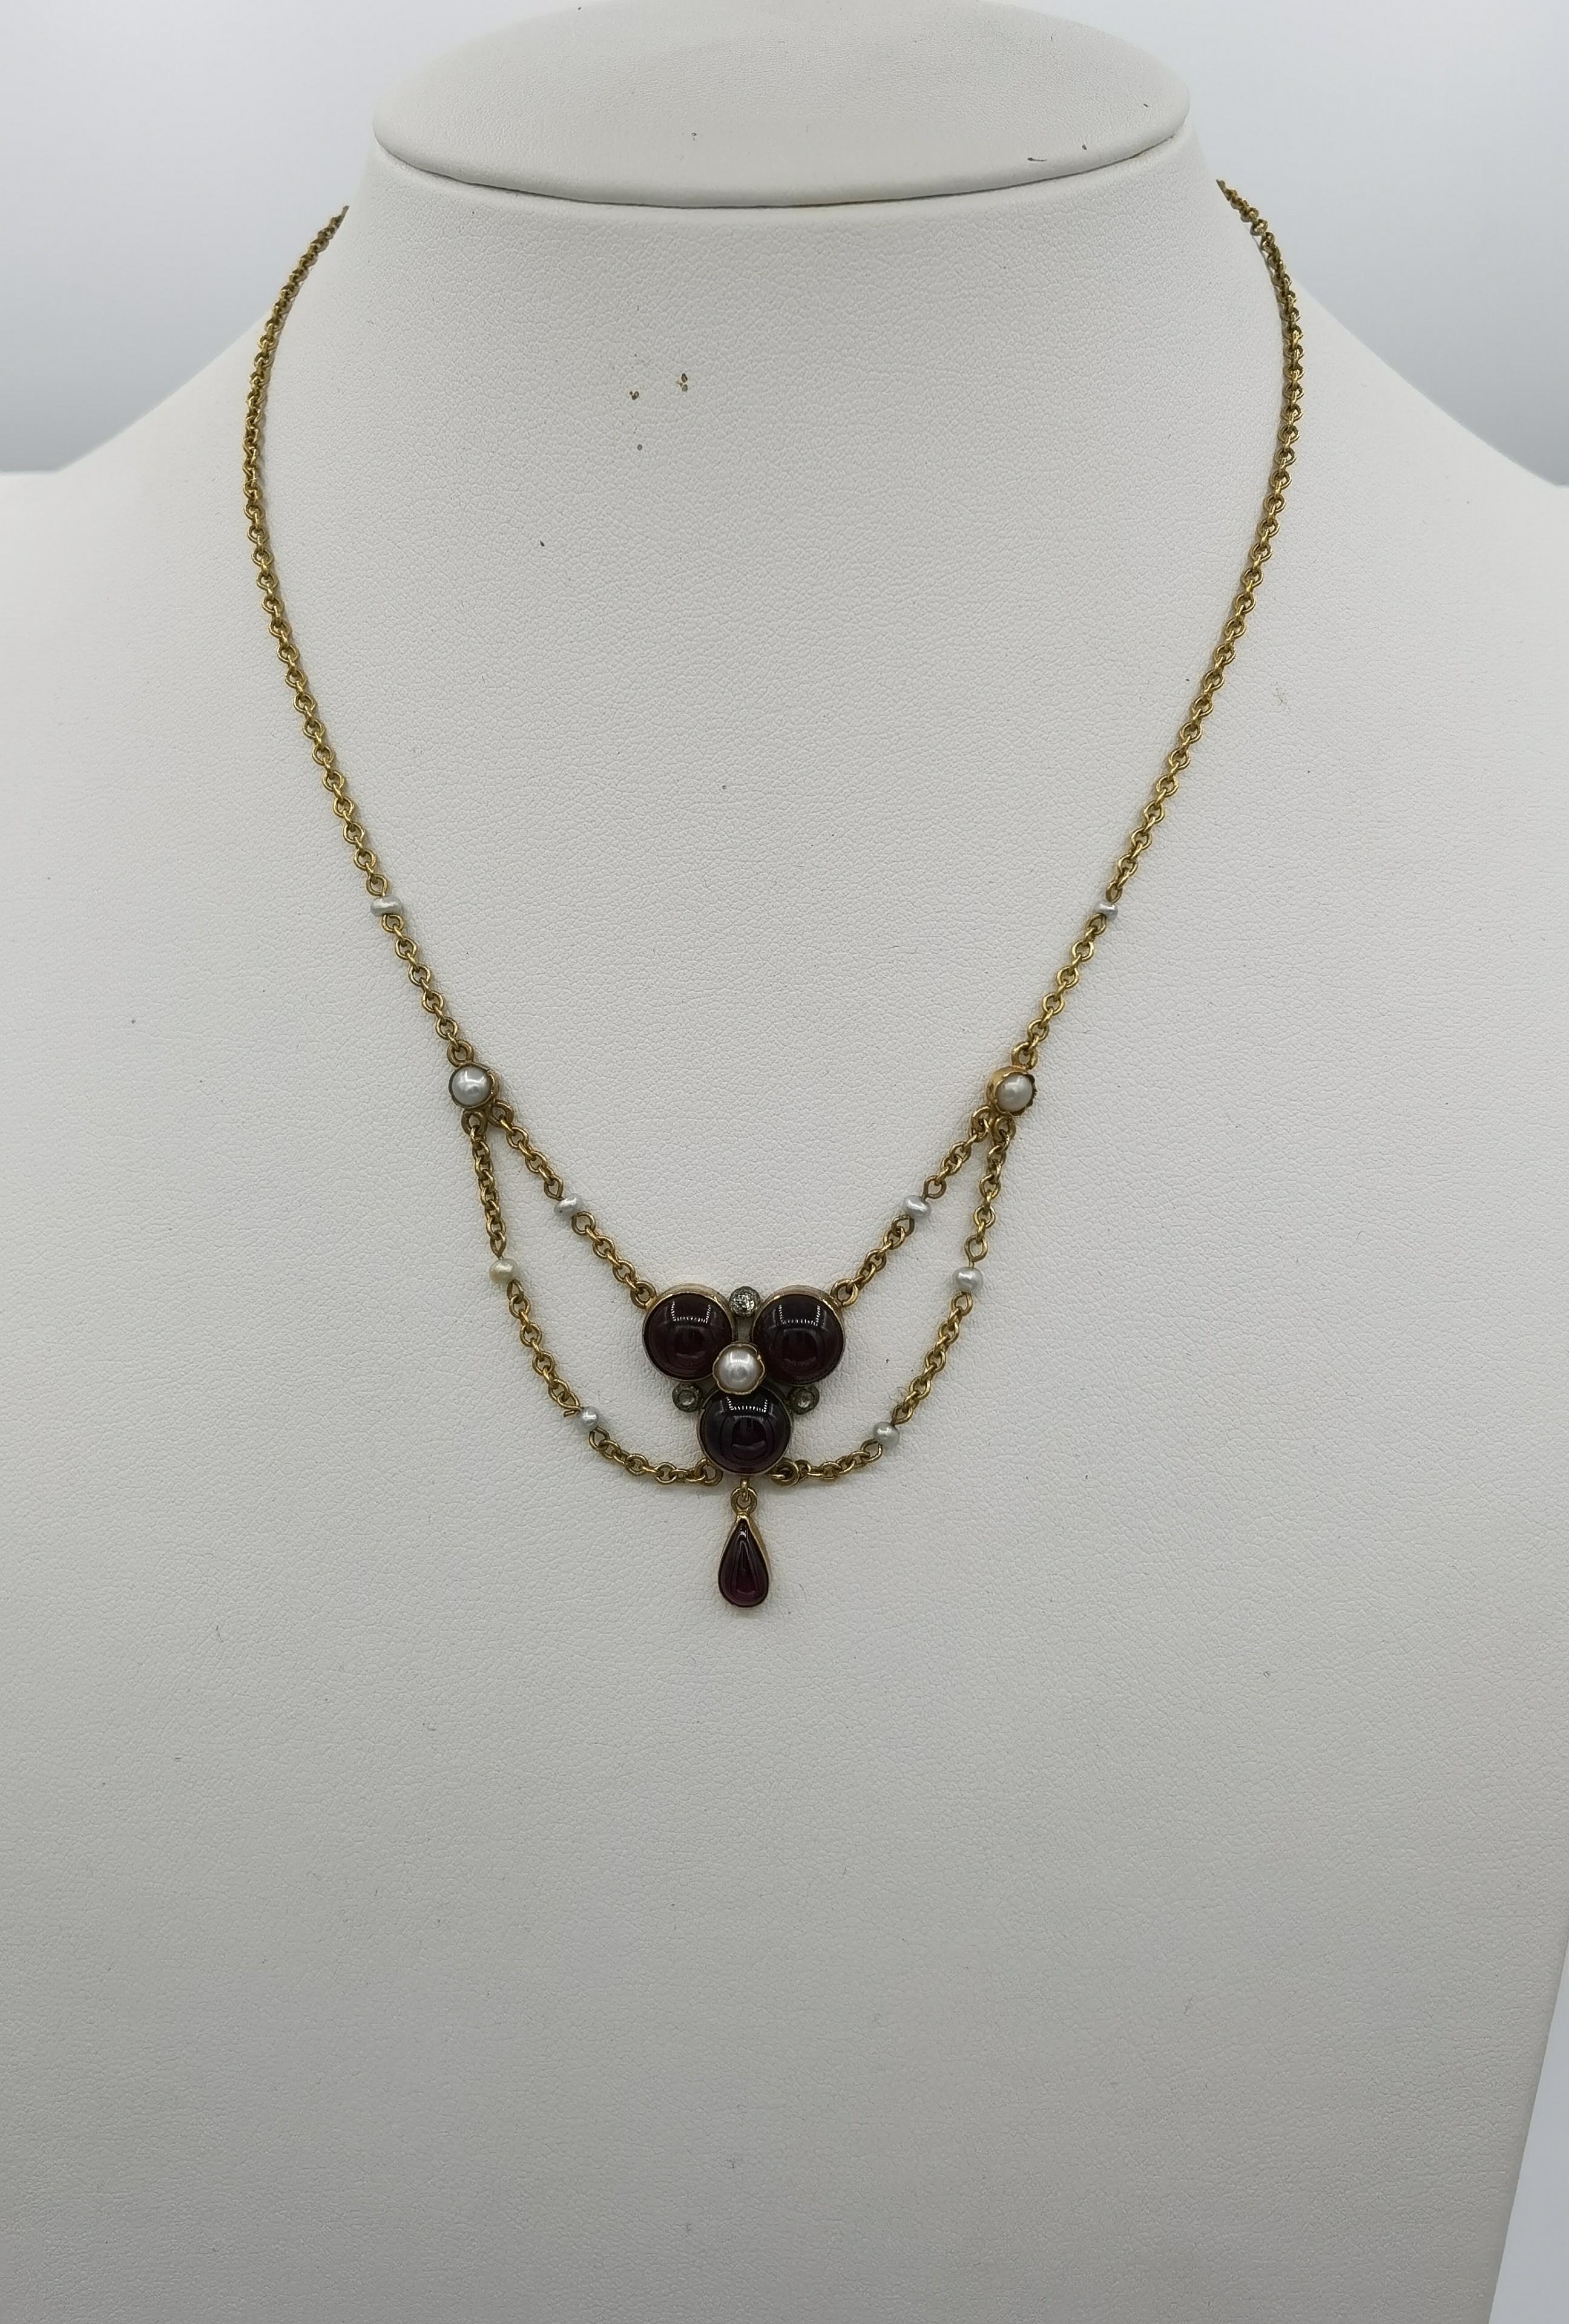 9 k Gelbgold
Granat-Cabouchonschnitt
Perlen
3 Diamanten
lang 41 cm im Wedel ca. 3 cm
Gewicht 7 Gramm
England um 1900